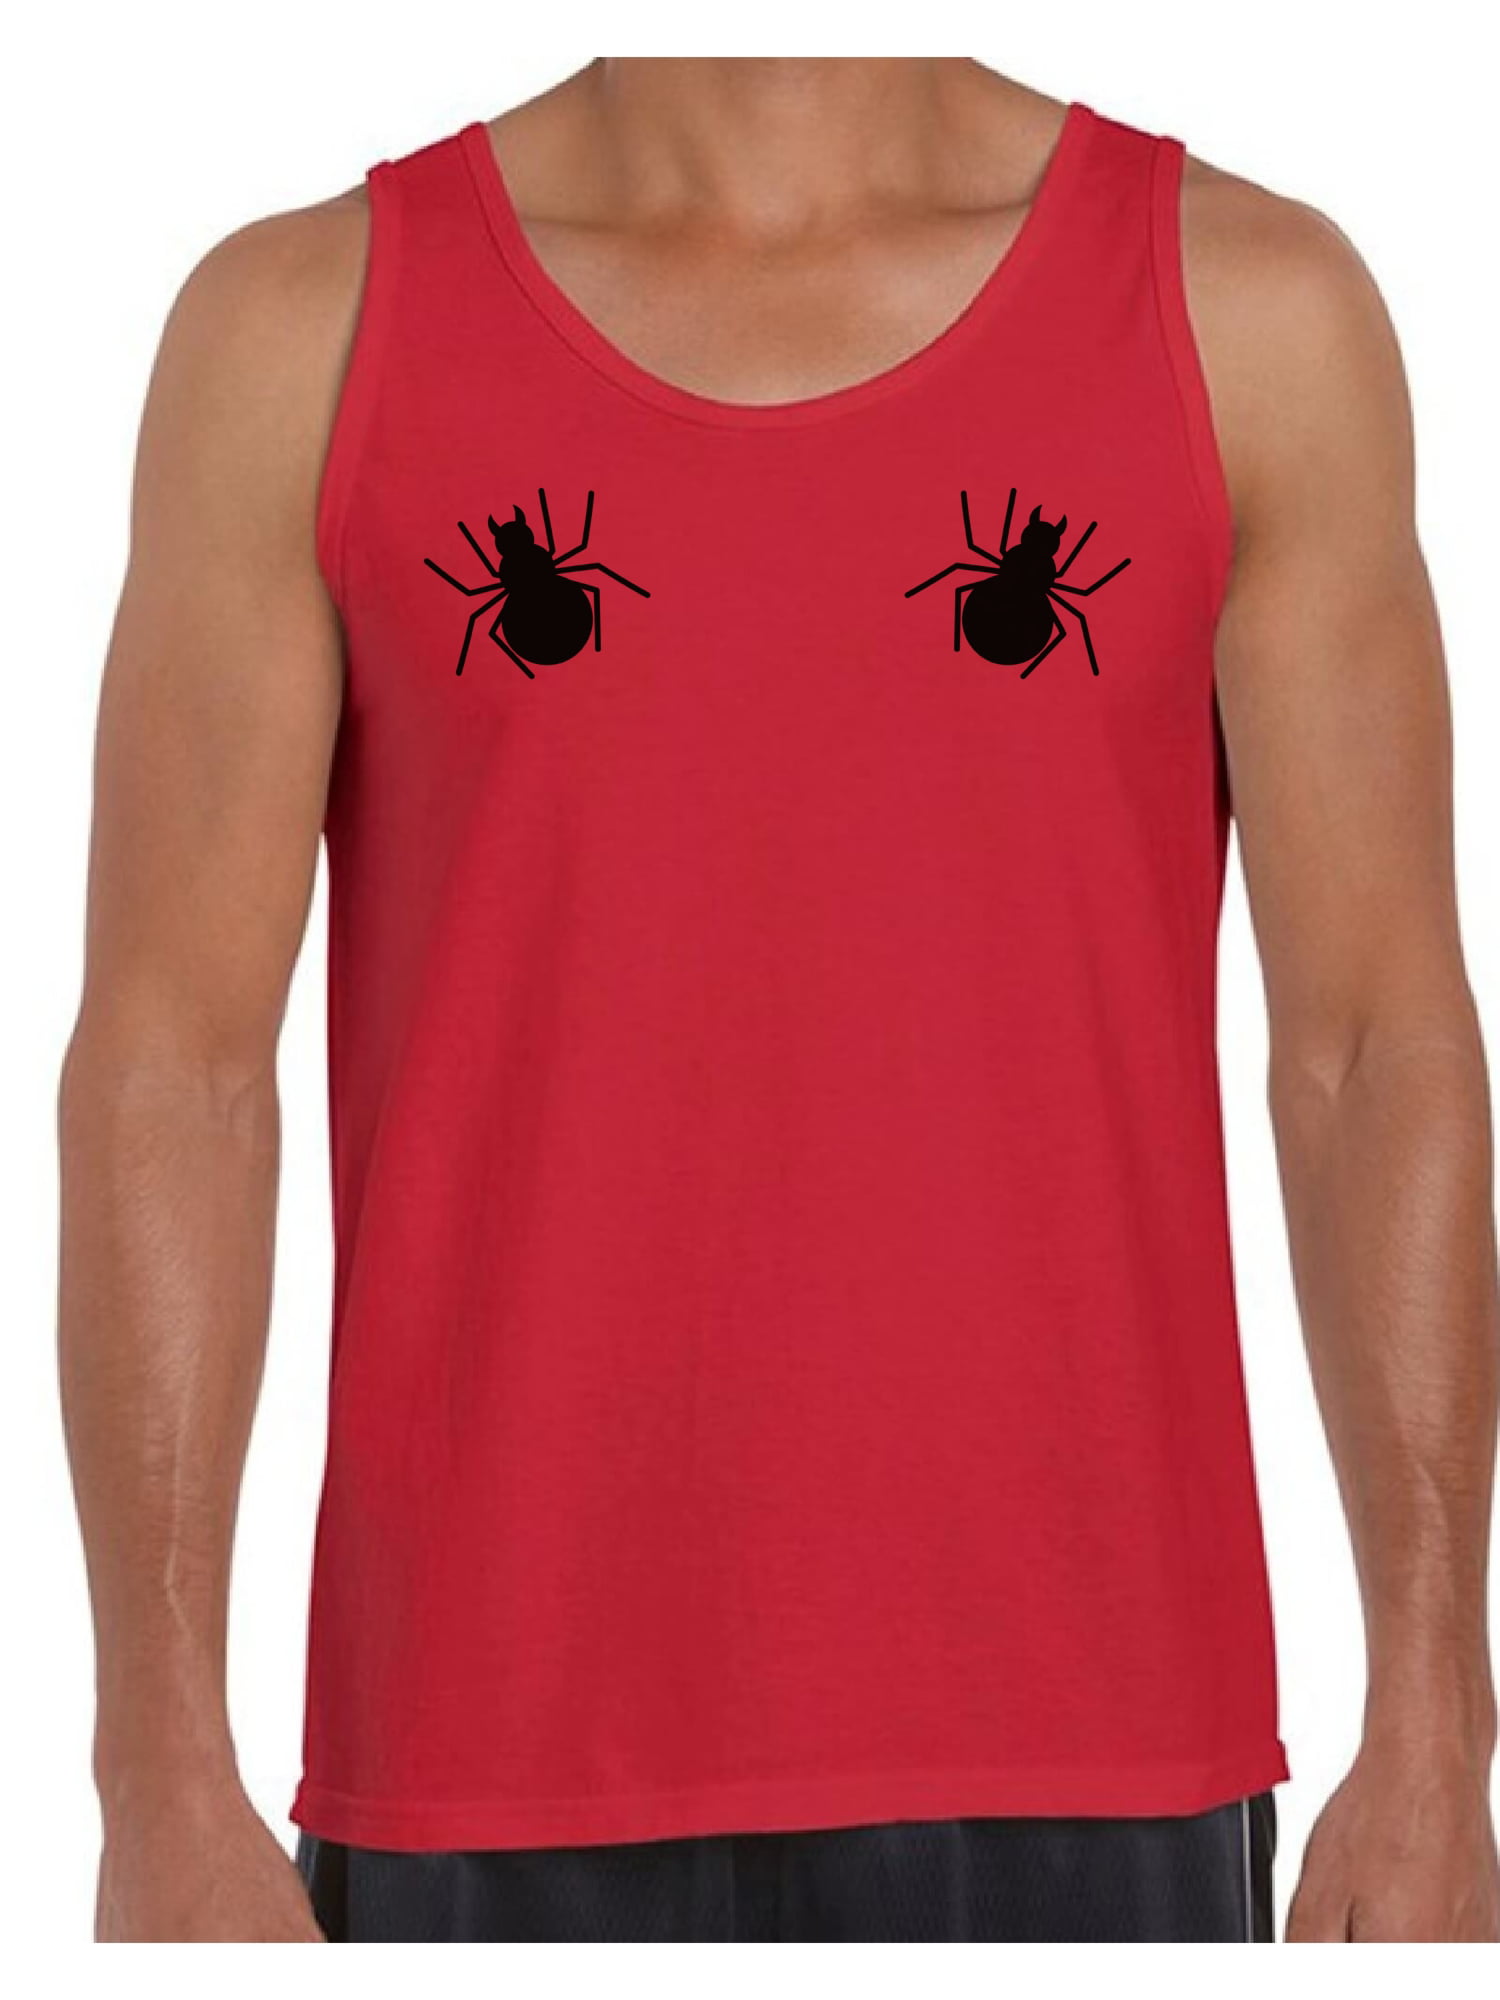 Boobs T-Shirt Spider Tank Tops for Men